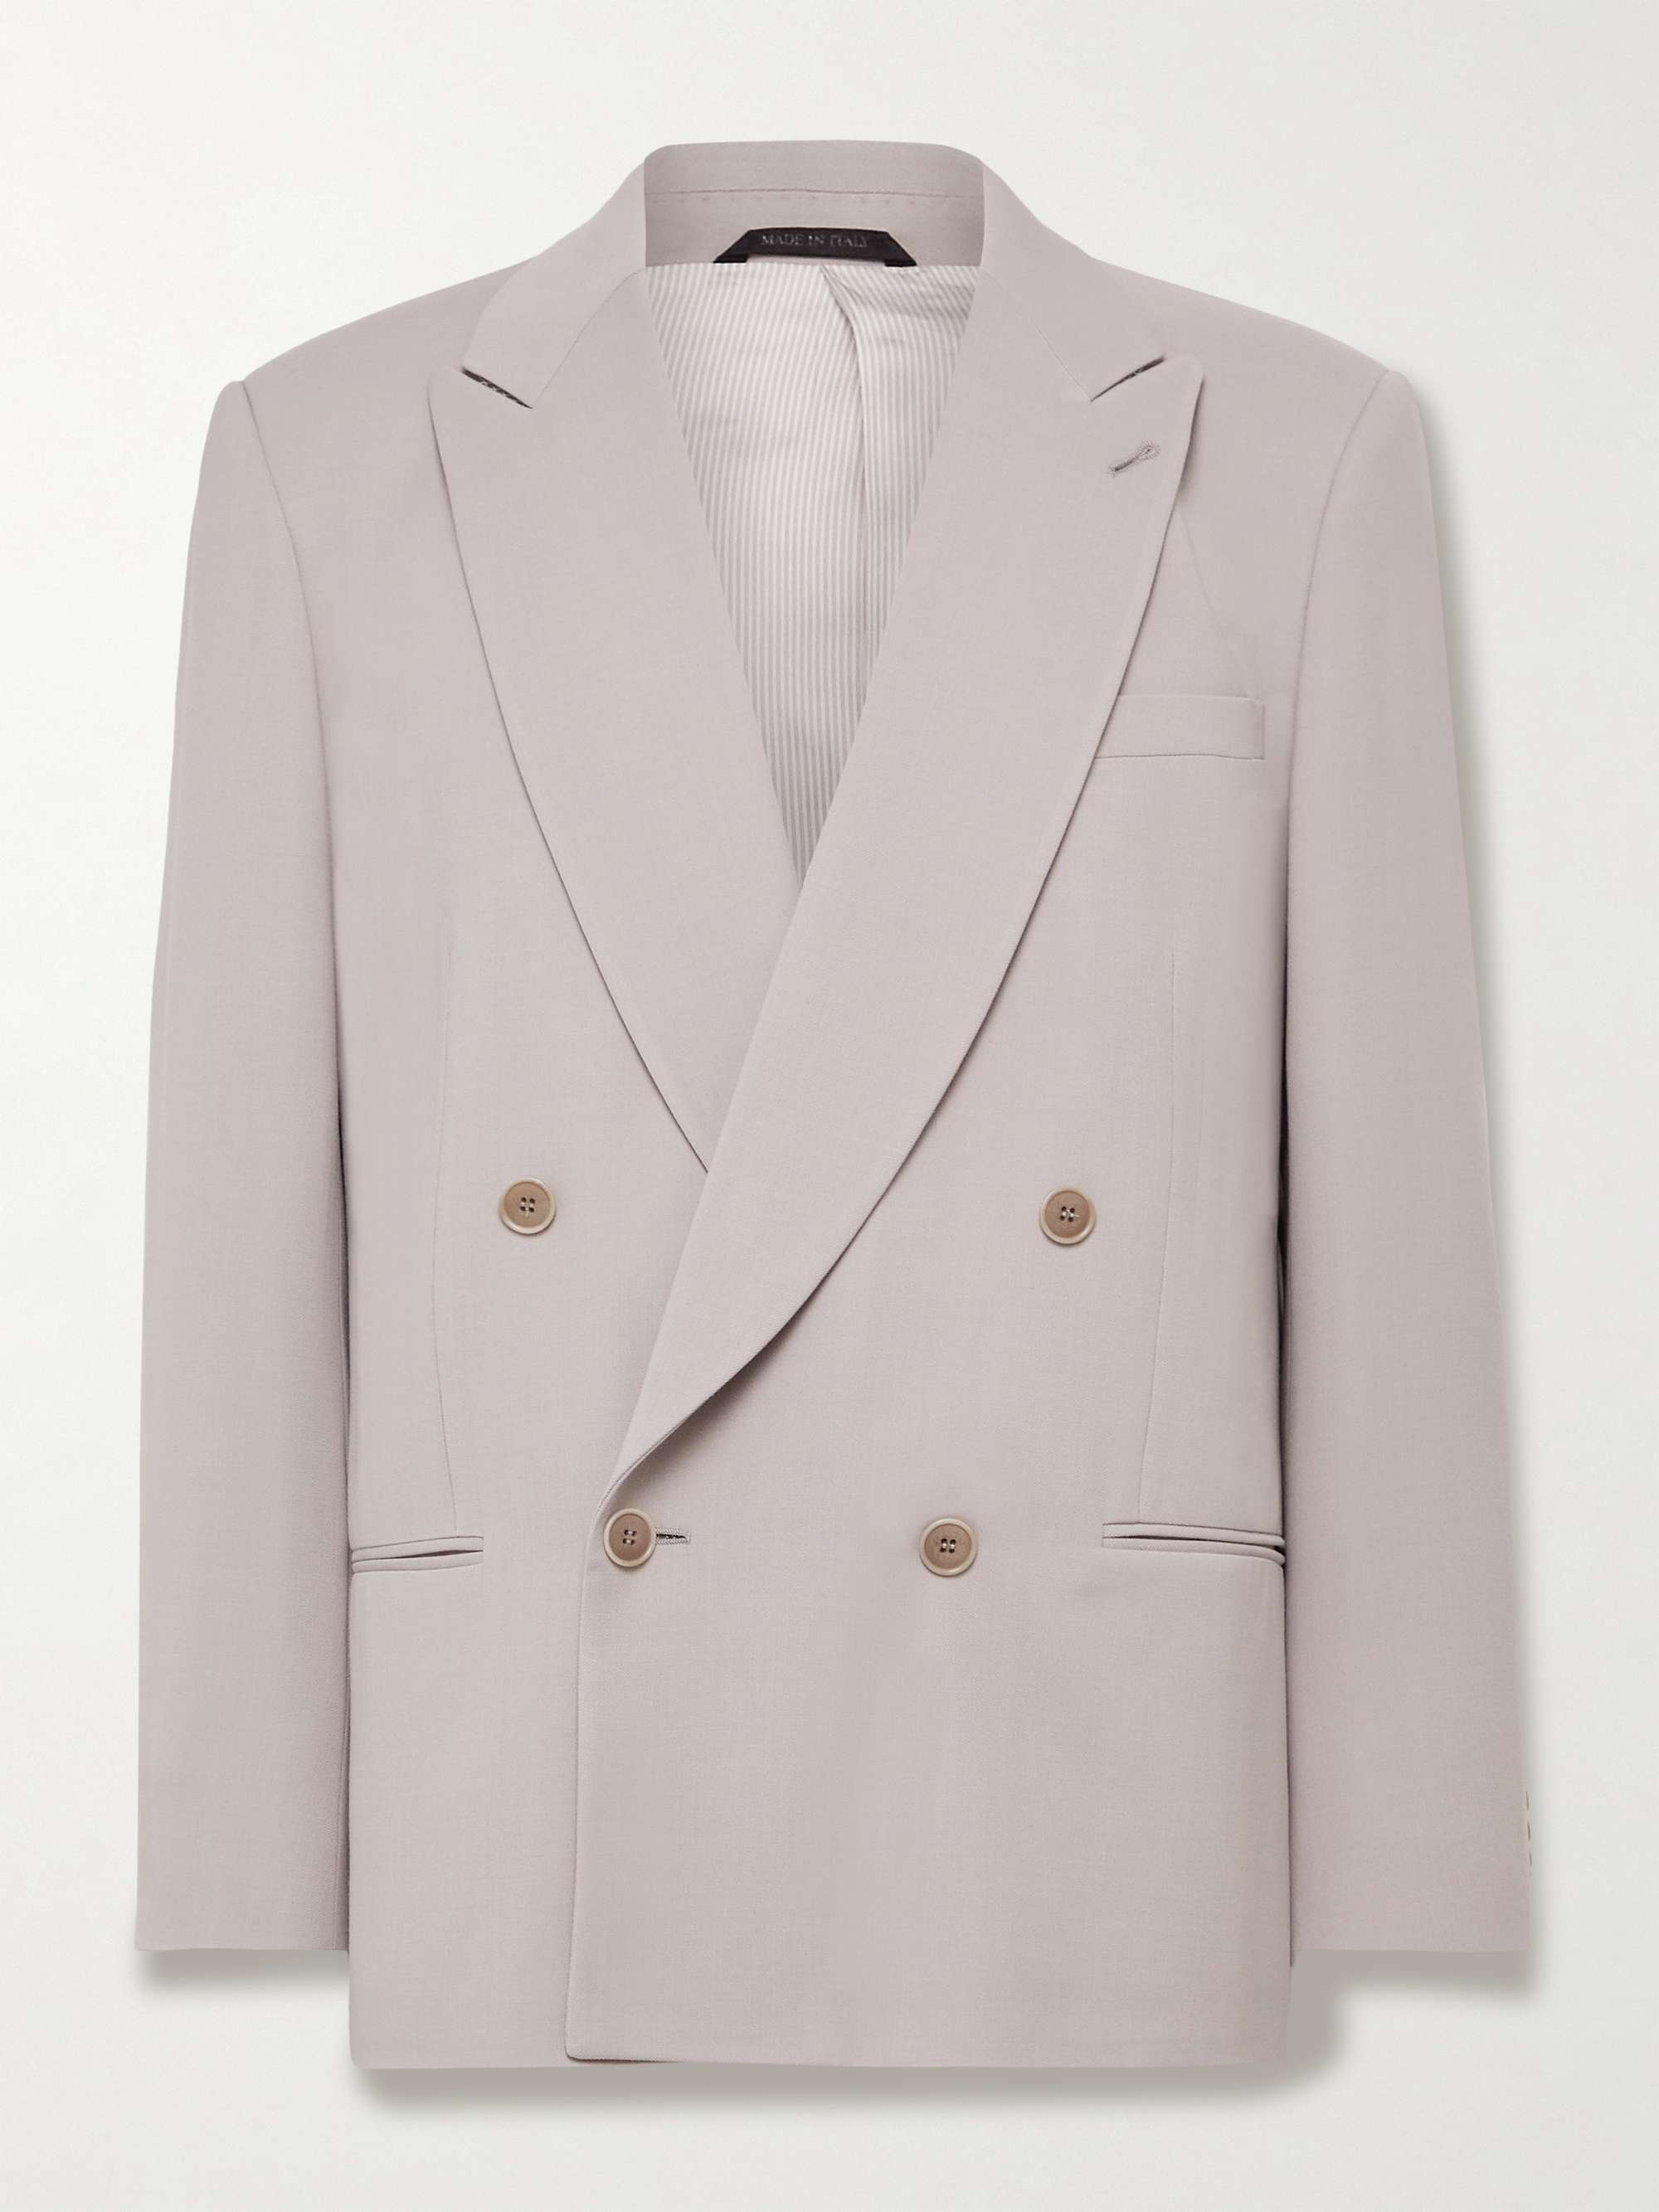 Armani Double Breasted Suit Deals | website.jkuat.ac.ke